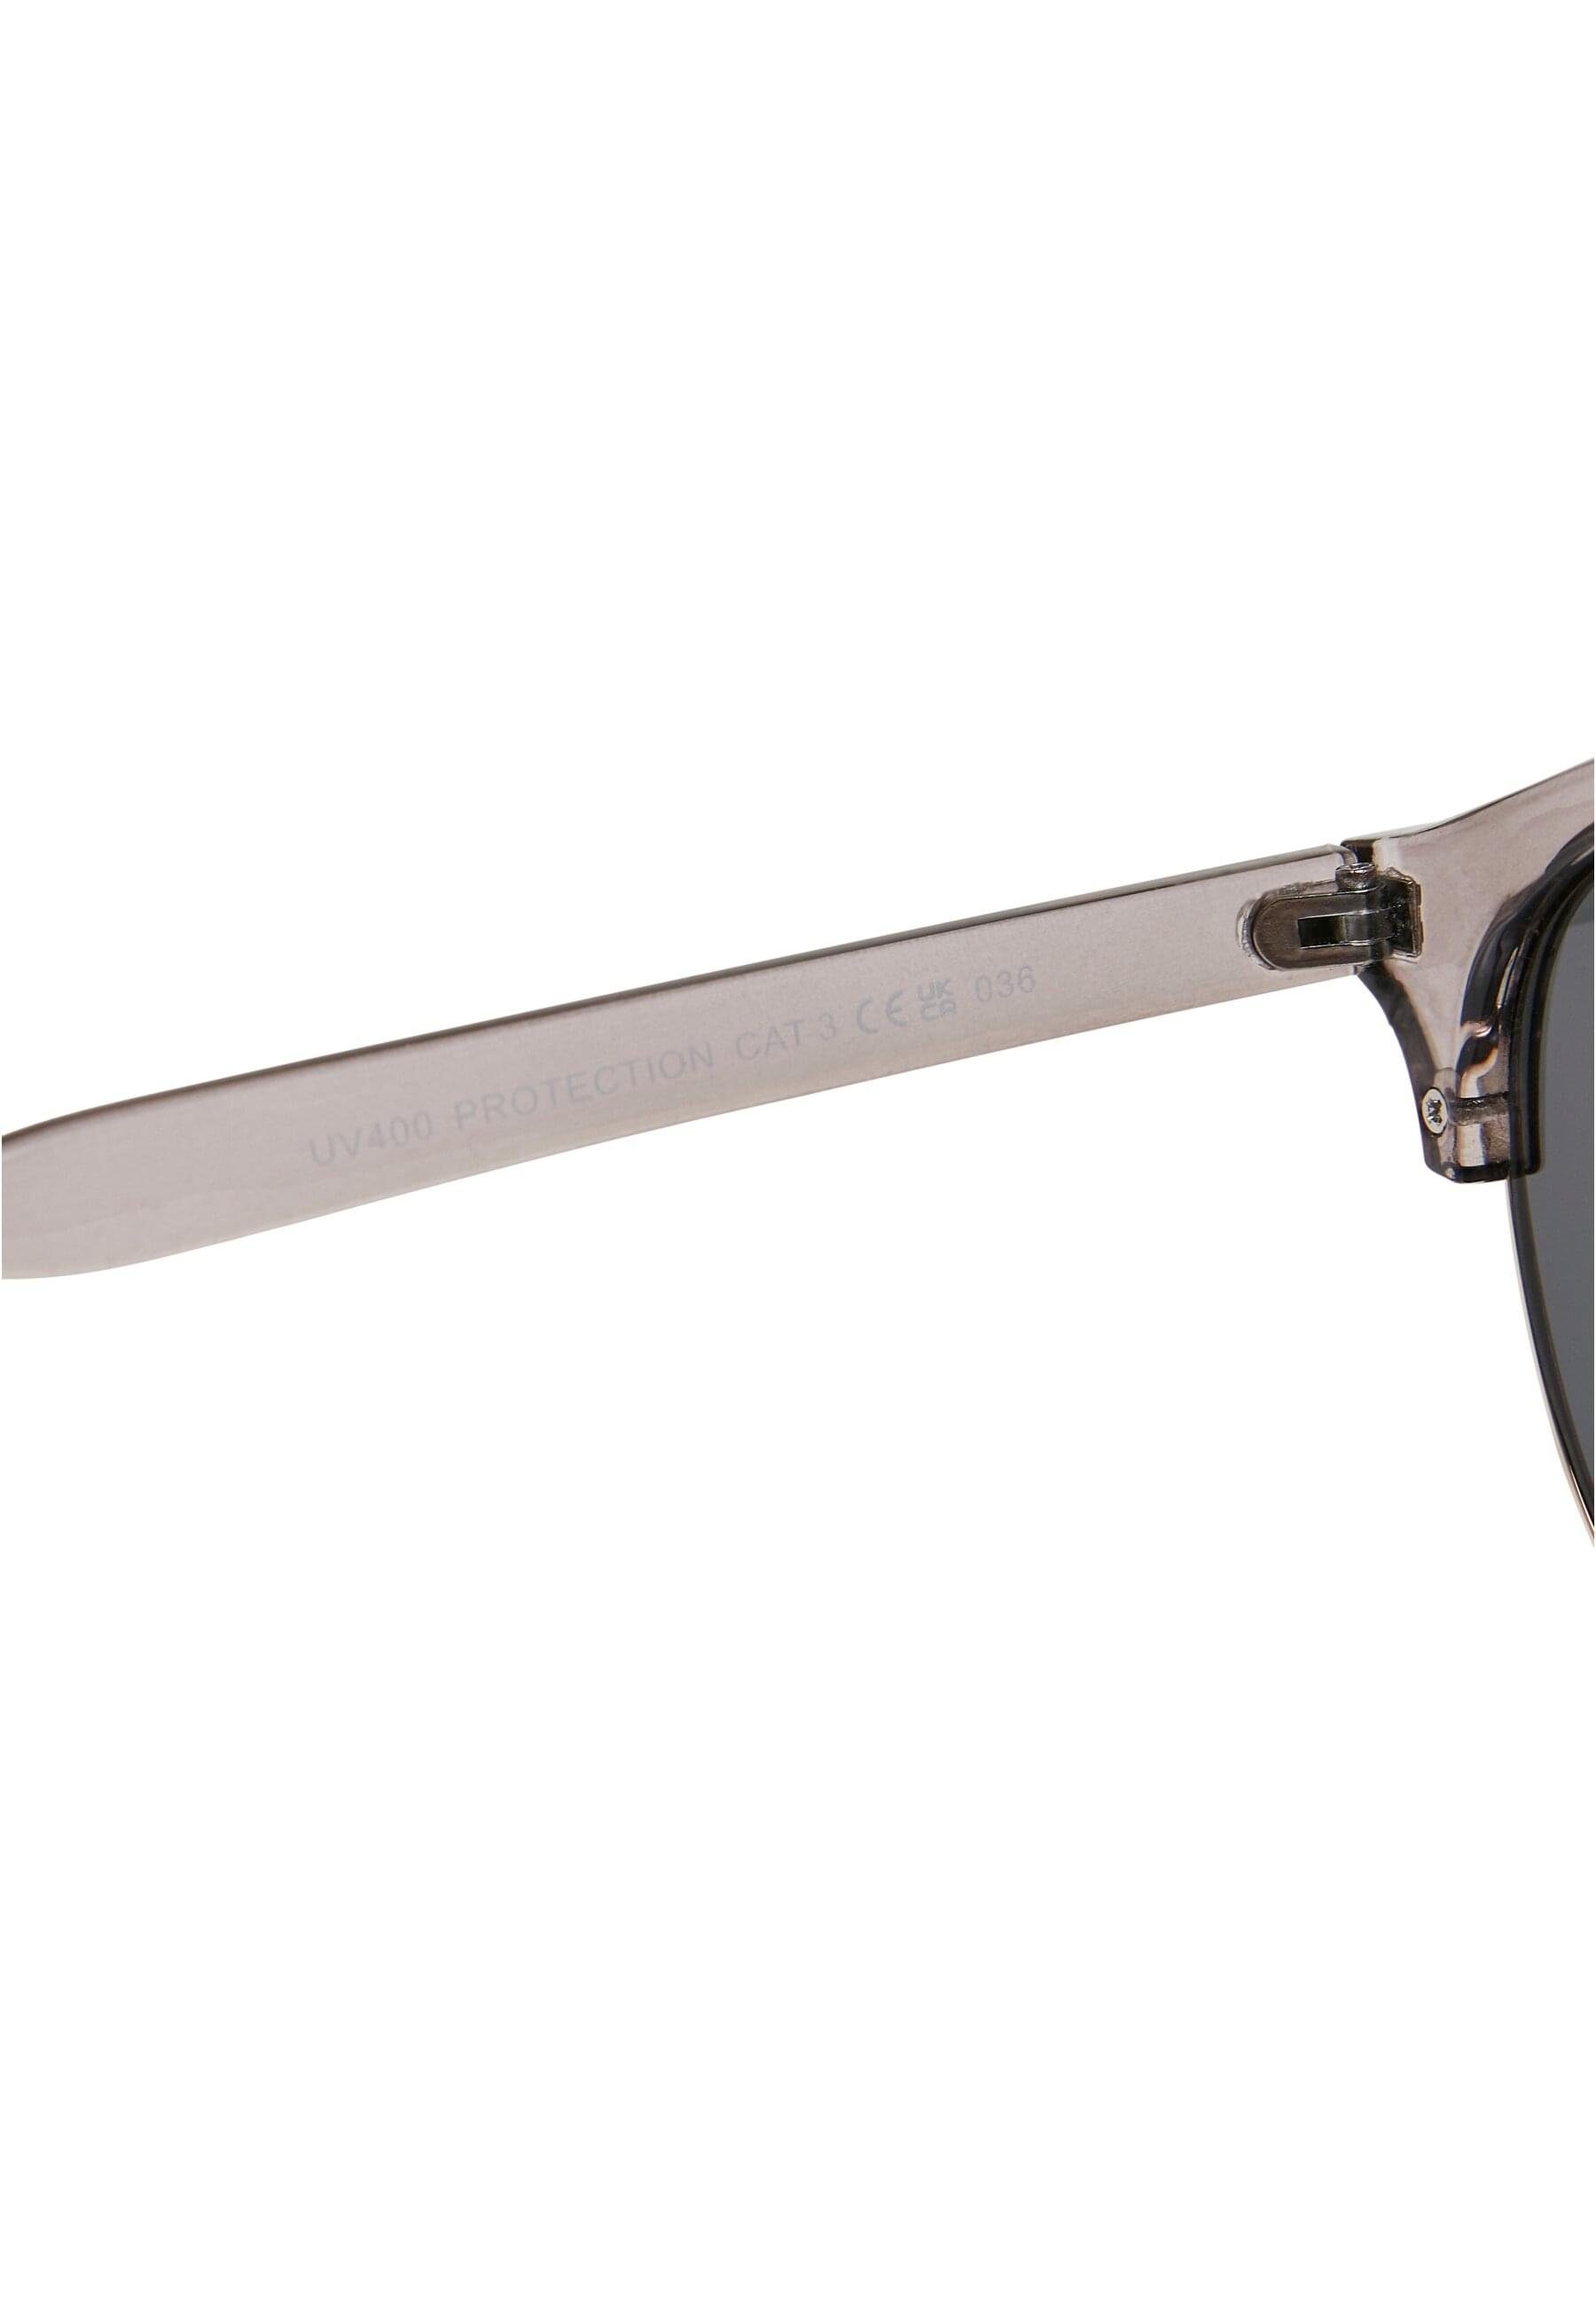 Sonnenbrille Unisex URBAN Sunglasses CLASSICS Bay grey Coral